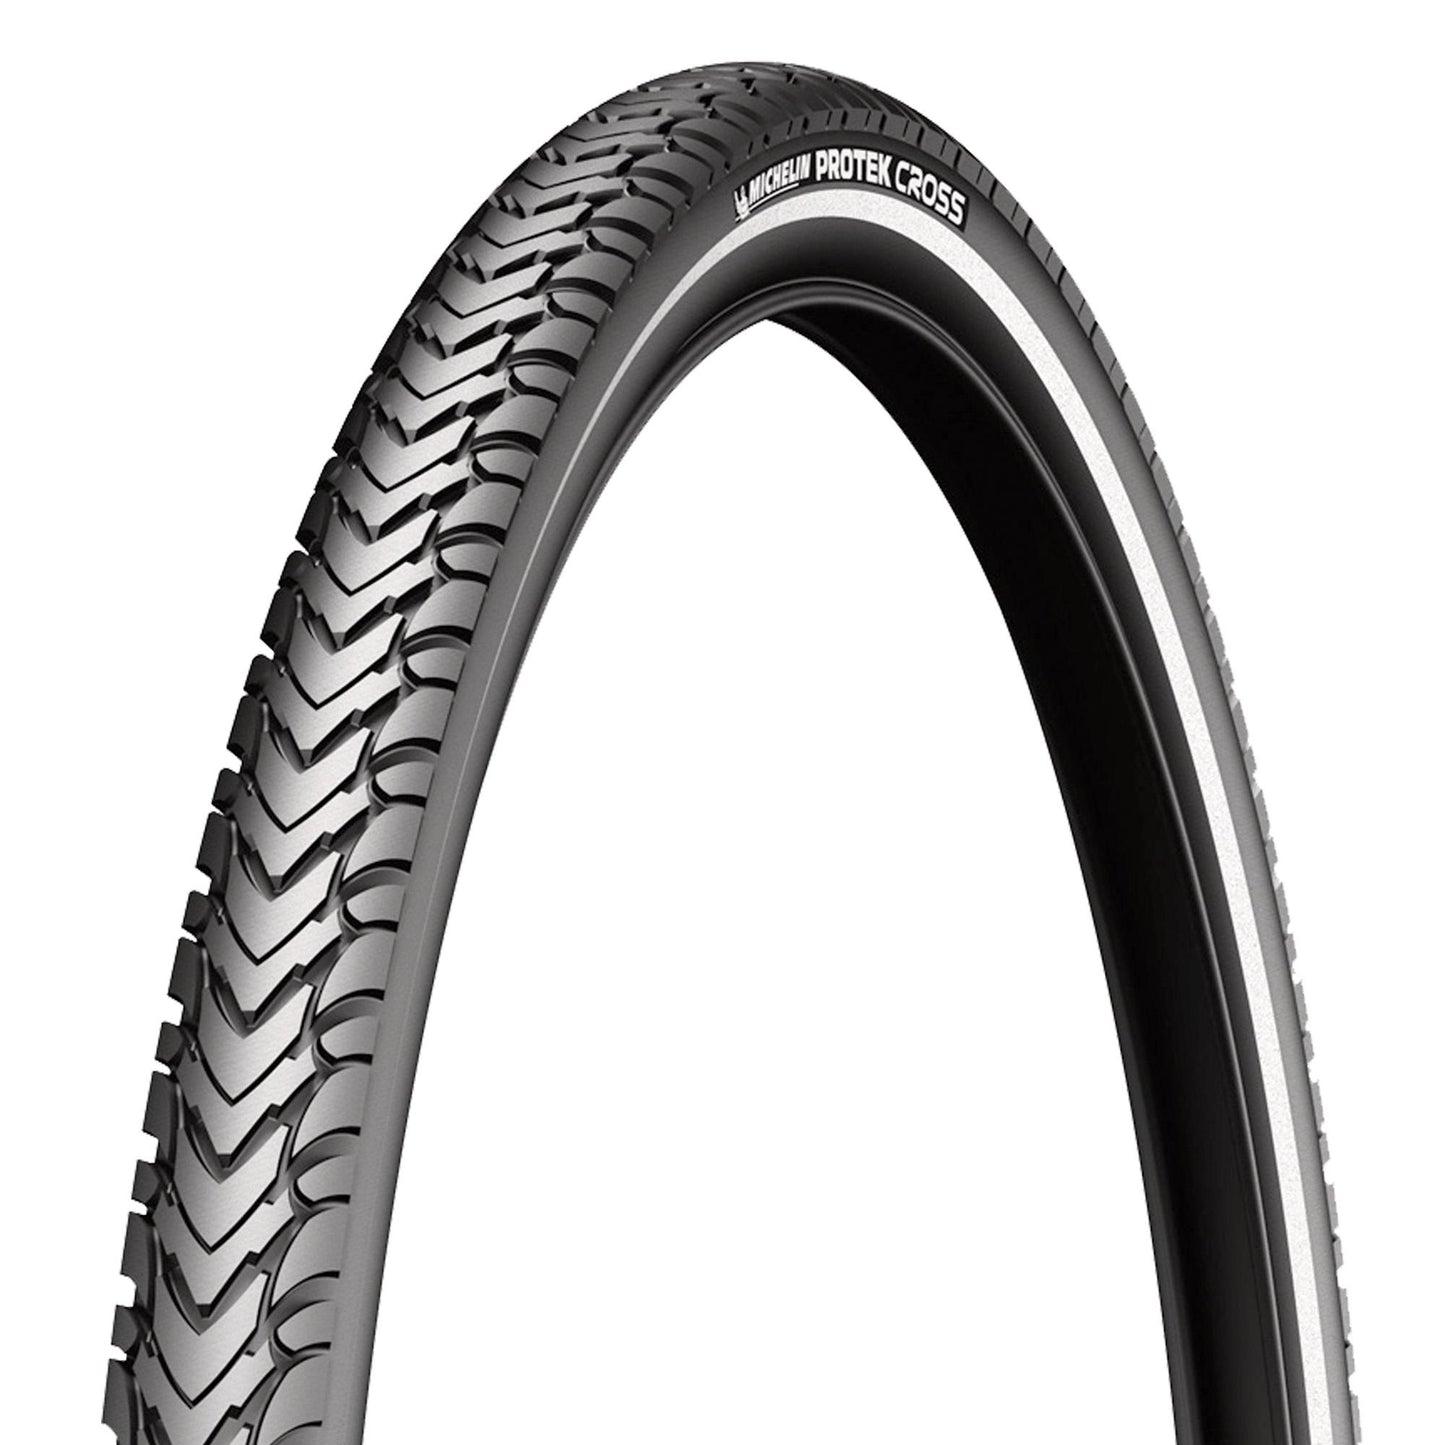 Michelin Protek Cross Tyre 700 x 47c Black / Reflective (47-622)